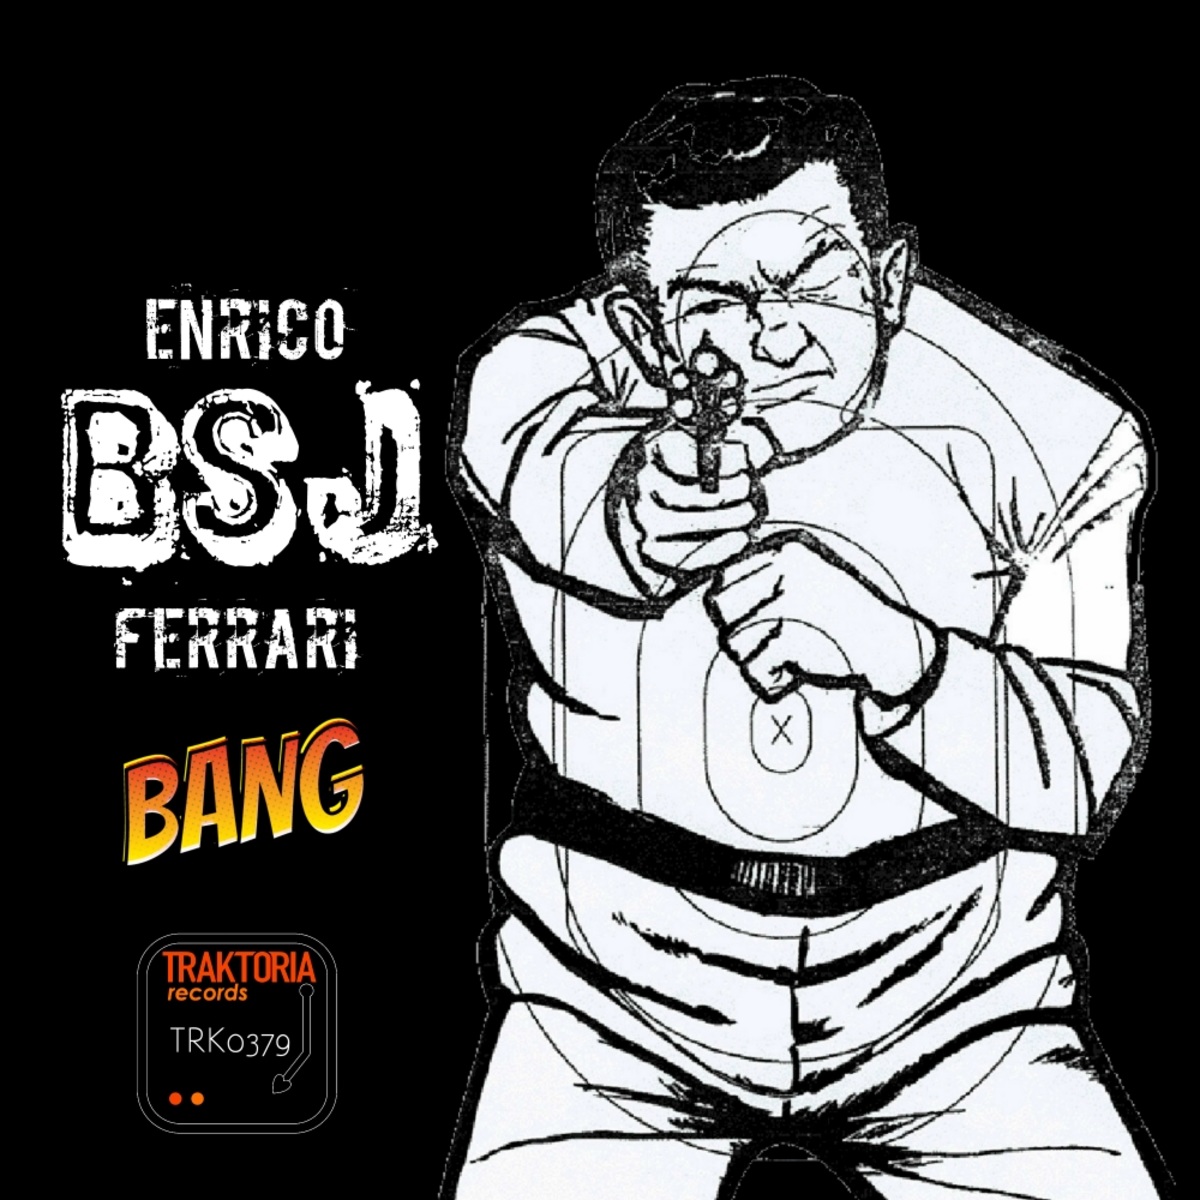 Enrico BSJ Ferrari - Bang / Traktoria